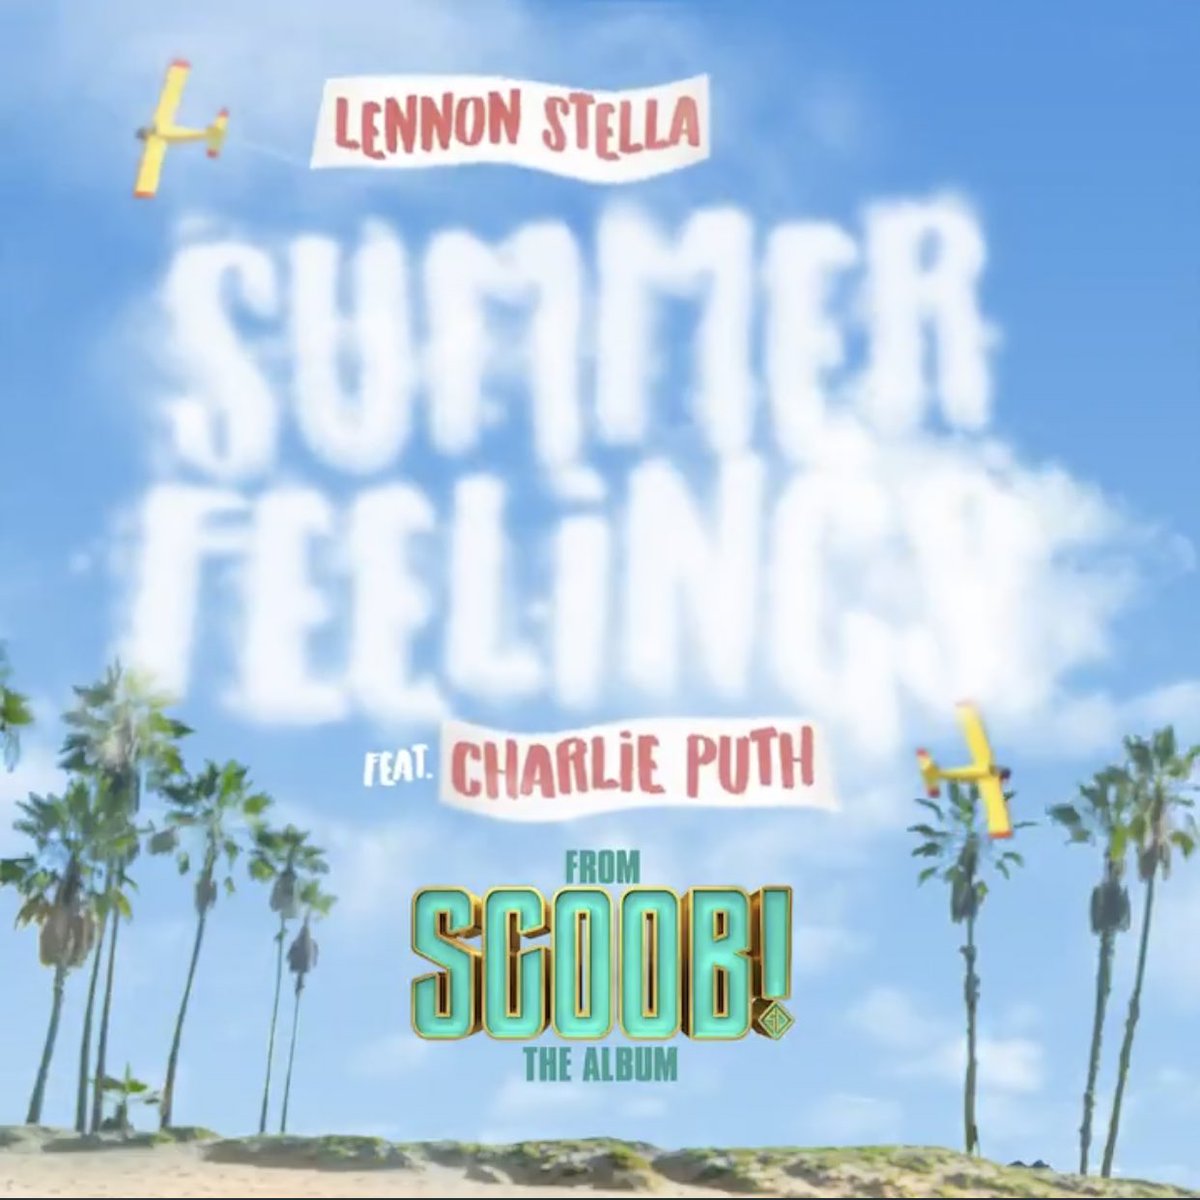 Lennon Stella - Summer Feelings (feat. Charlie Puth)